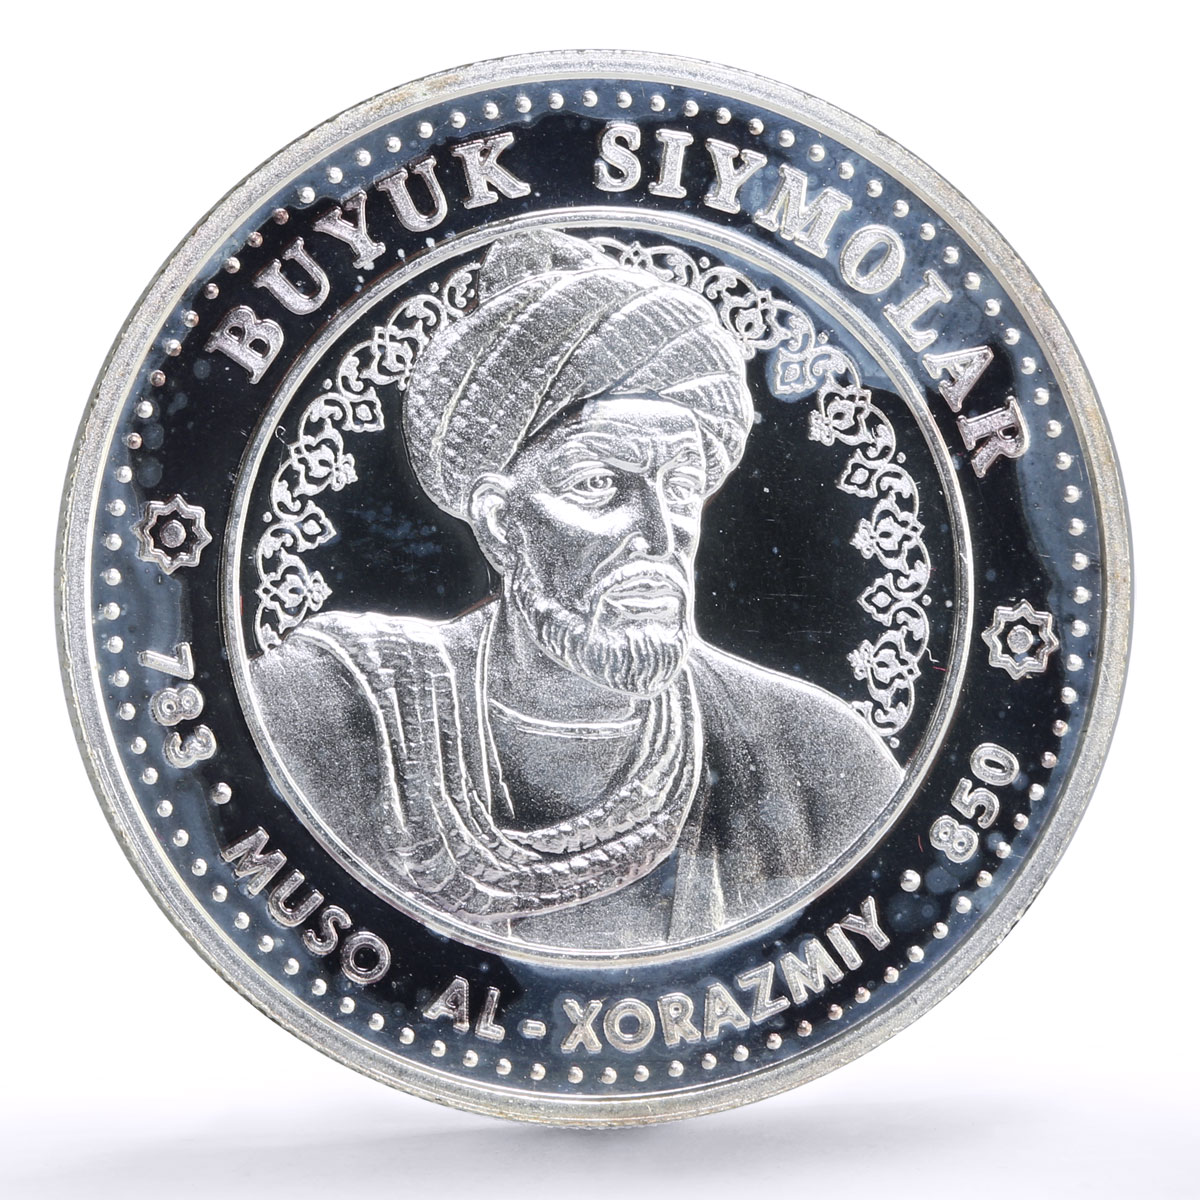 Uzbekistan 100 som Great Ancestors Scientist Al Khwarizmi proof silver coin 1999